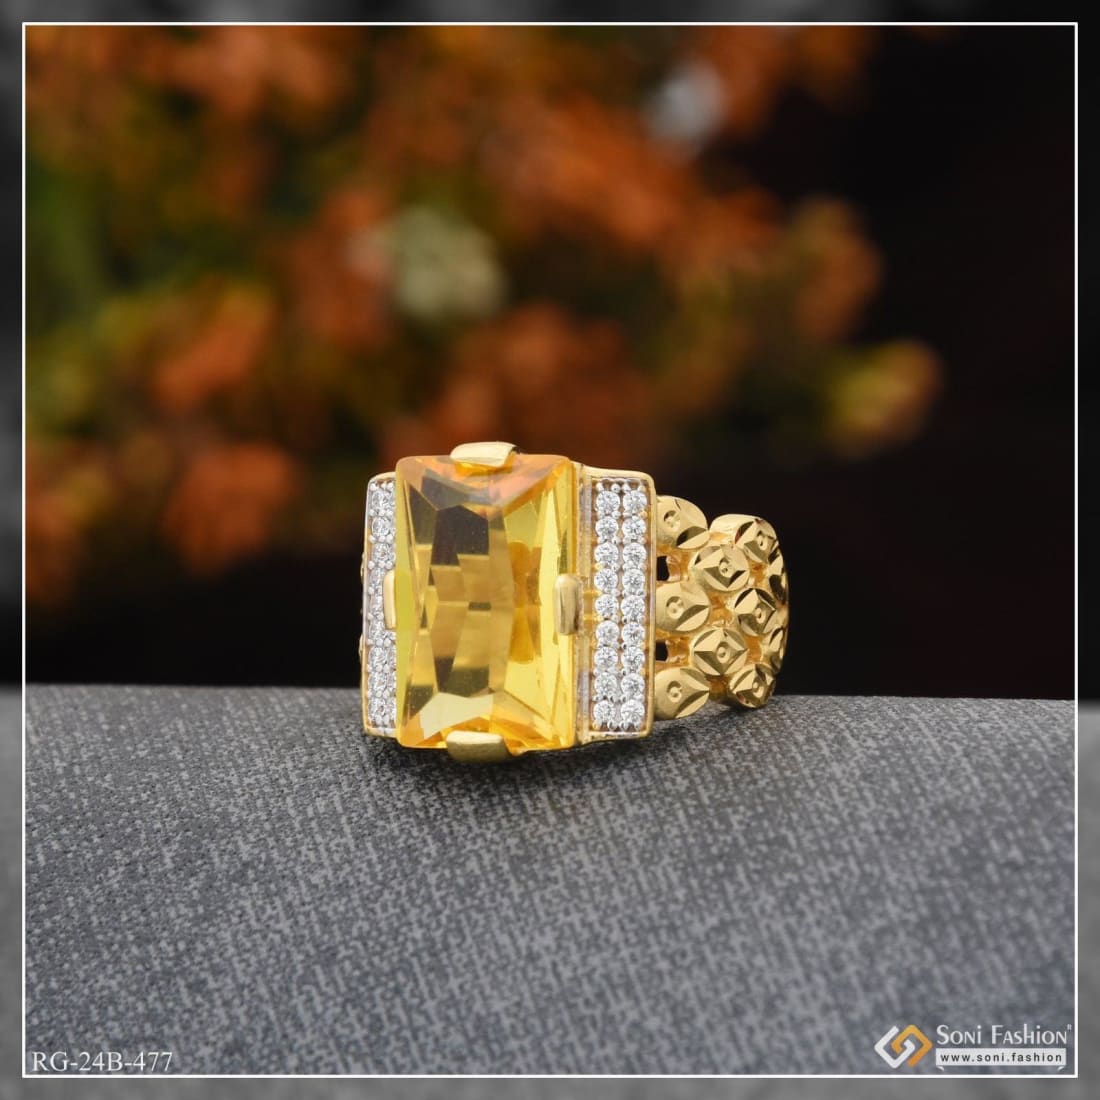 Yellow Sapphire - Buy Original Pukhraj Stone at Best Price